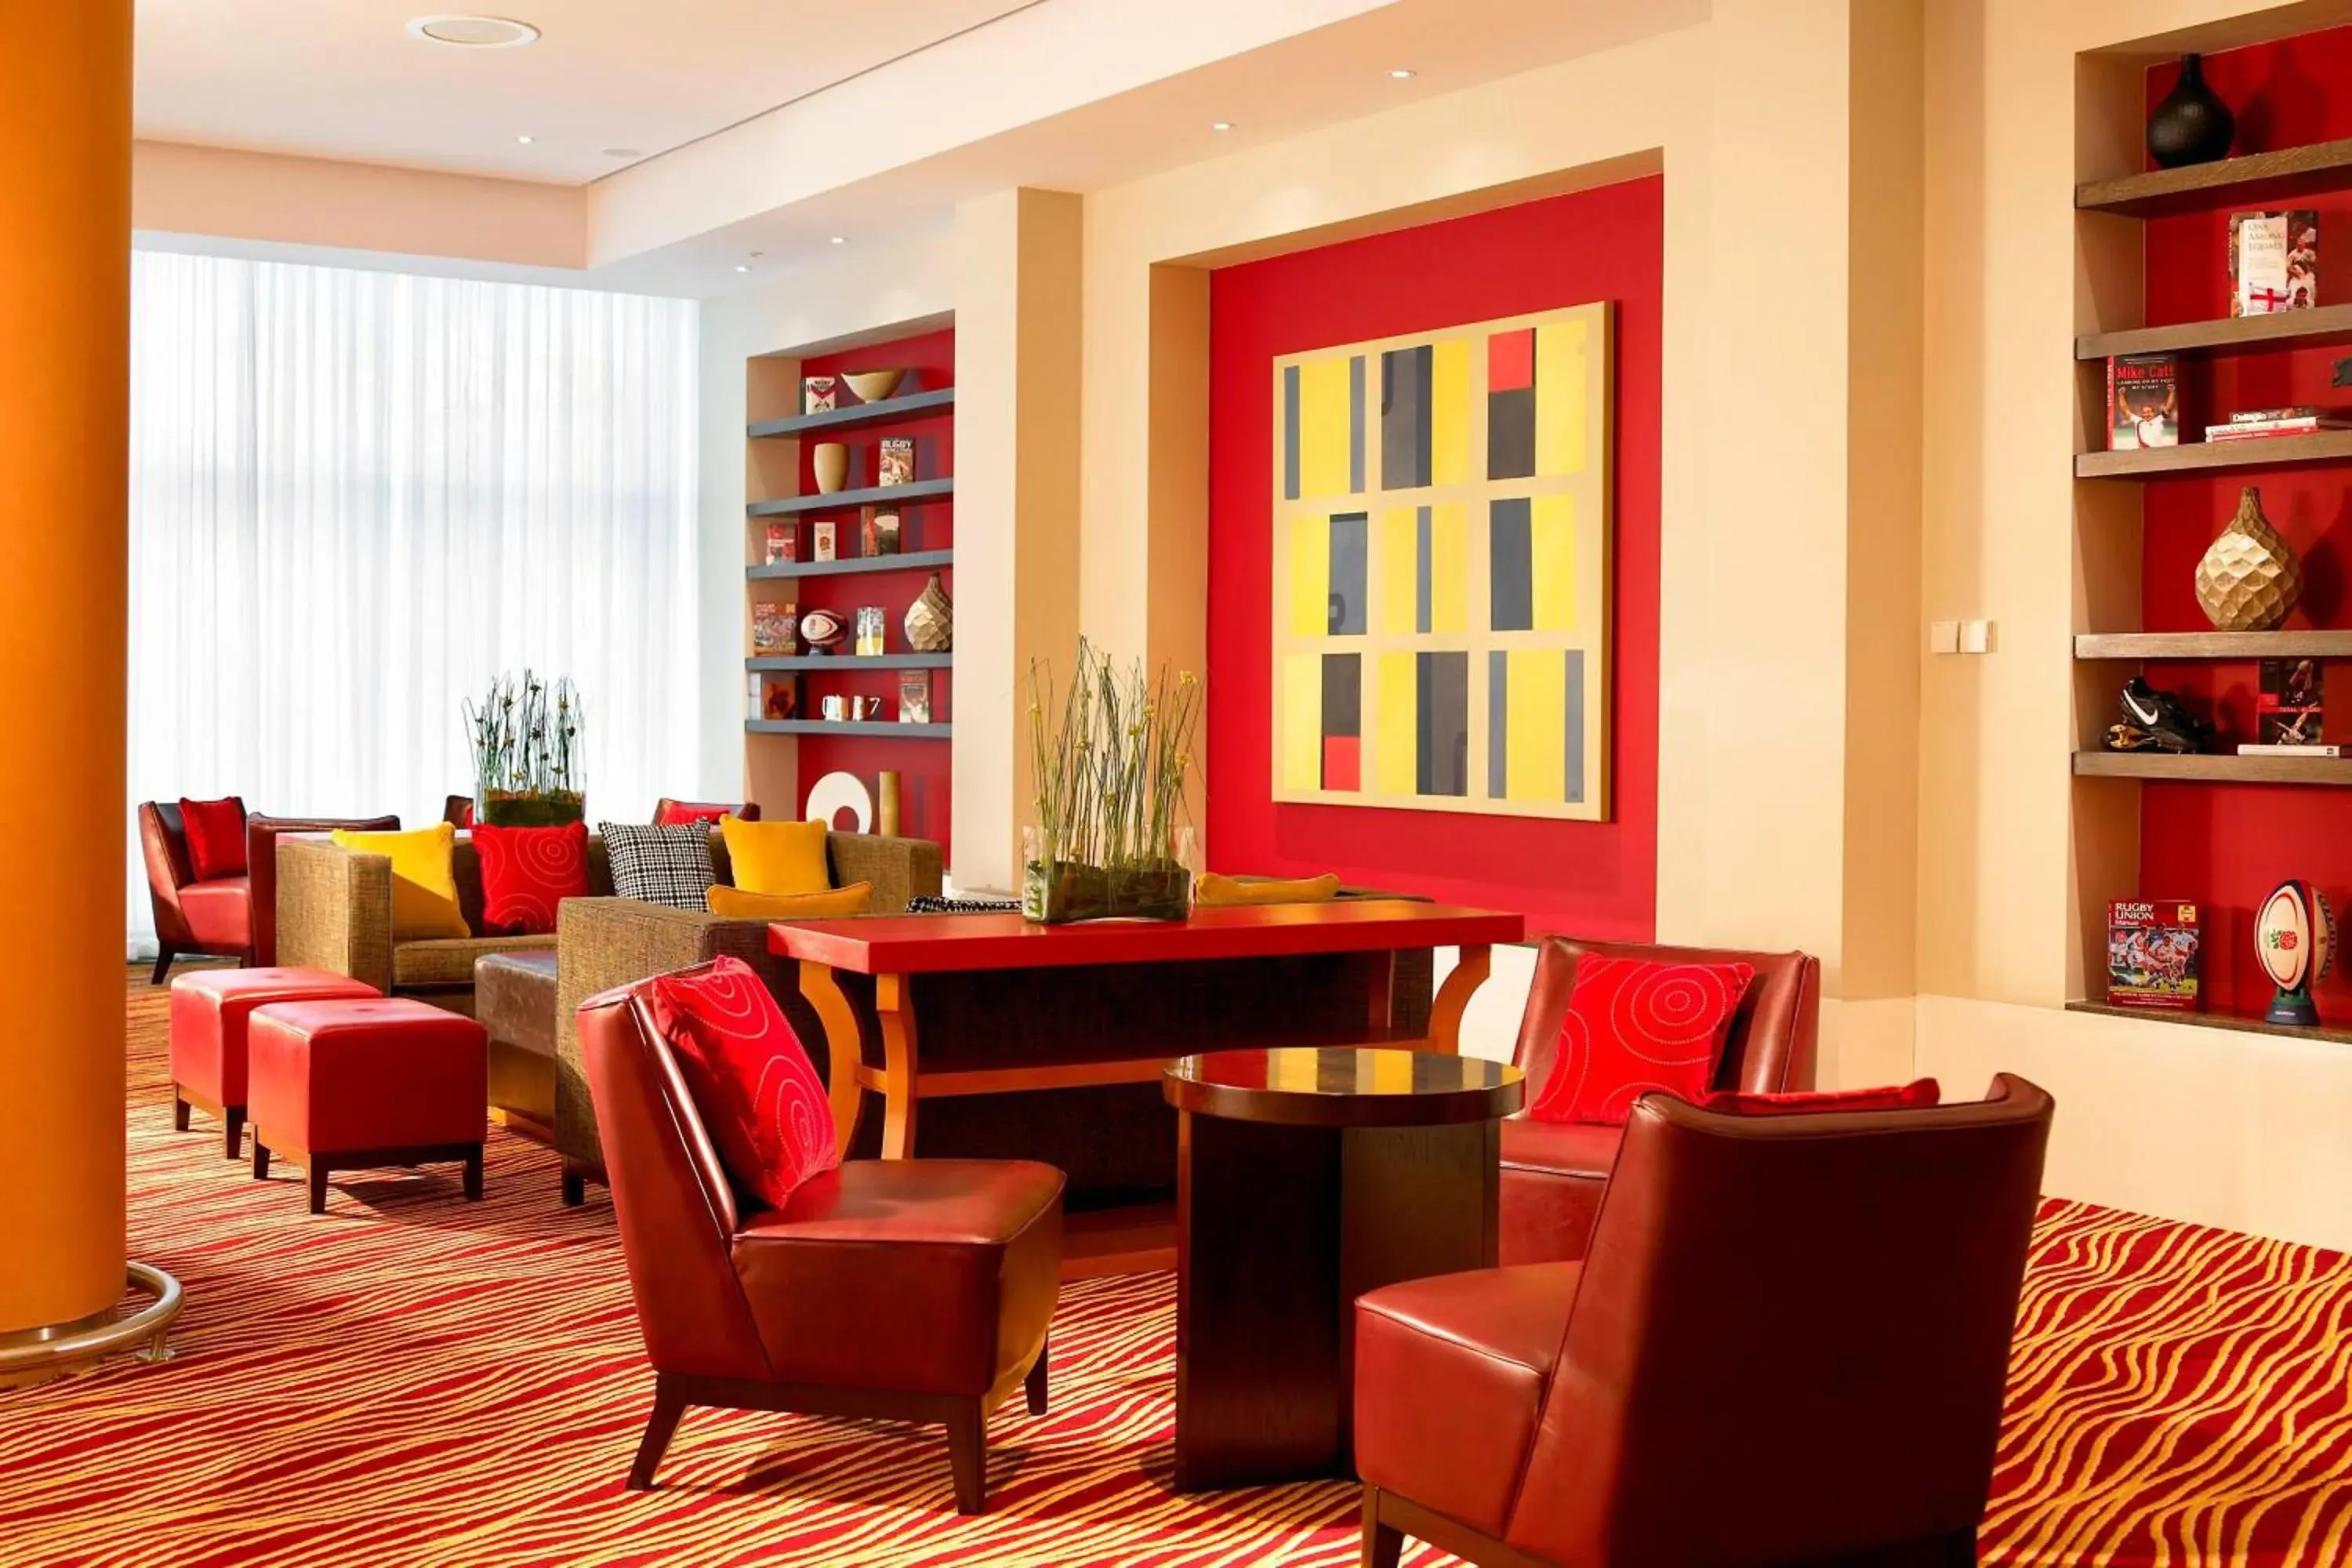 Lobby or reception in London Marriott Hotel Twickenham